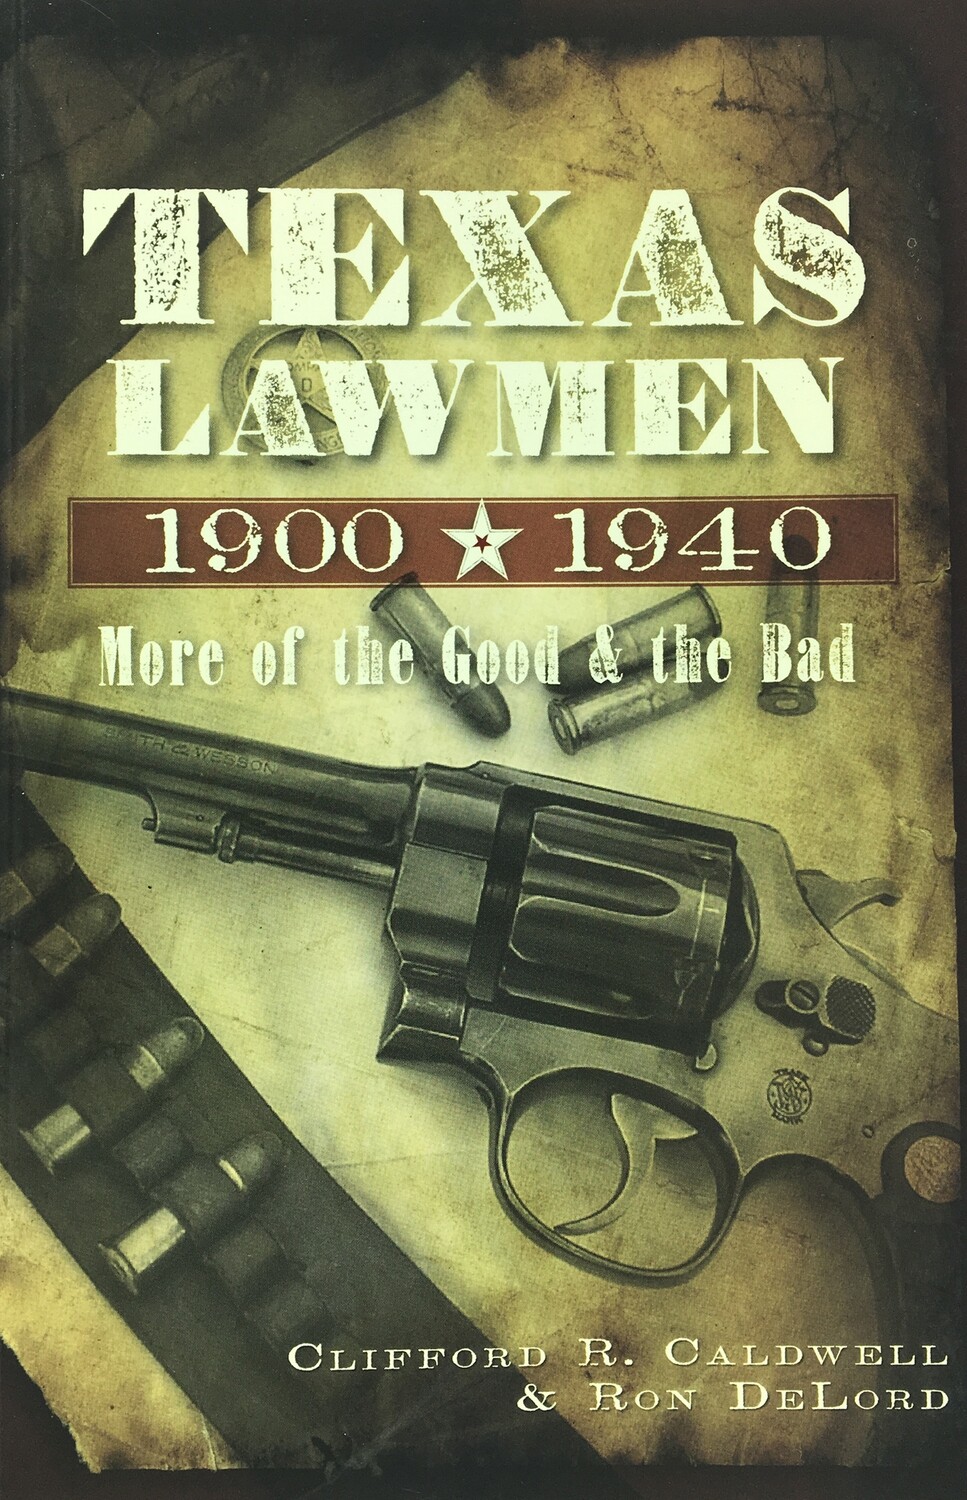 Texas Lawmen 1900 - 1940